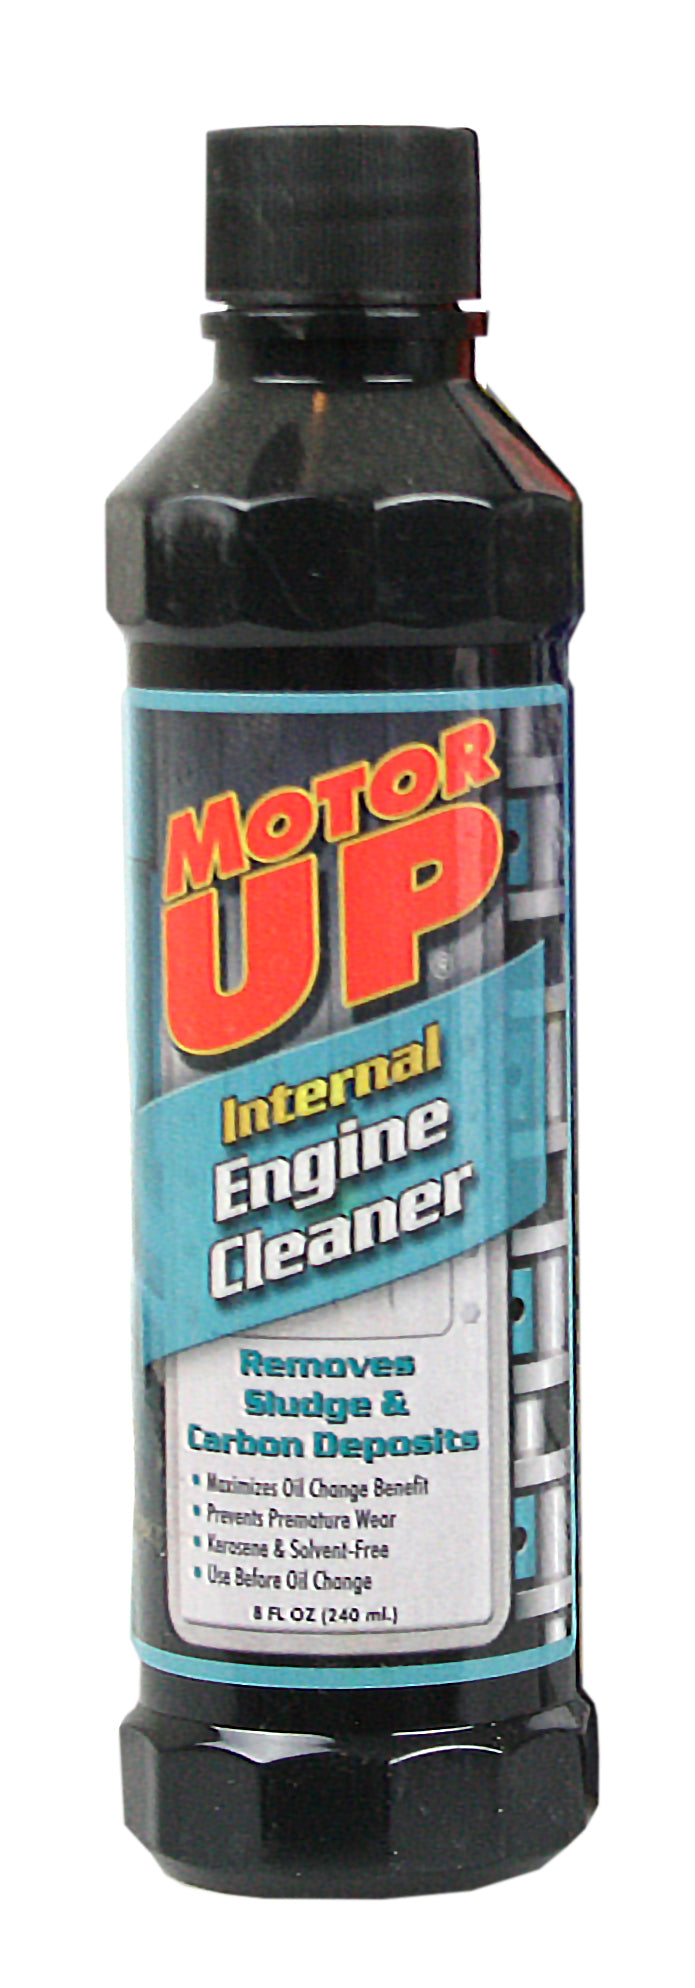 MotorUp Internal Engine Cleaner